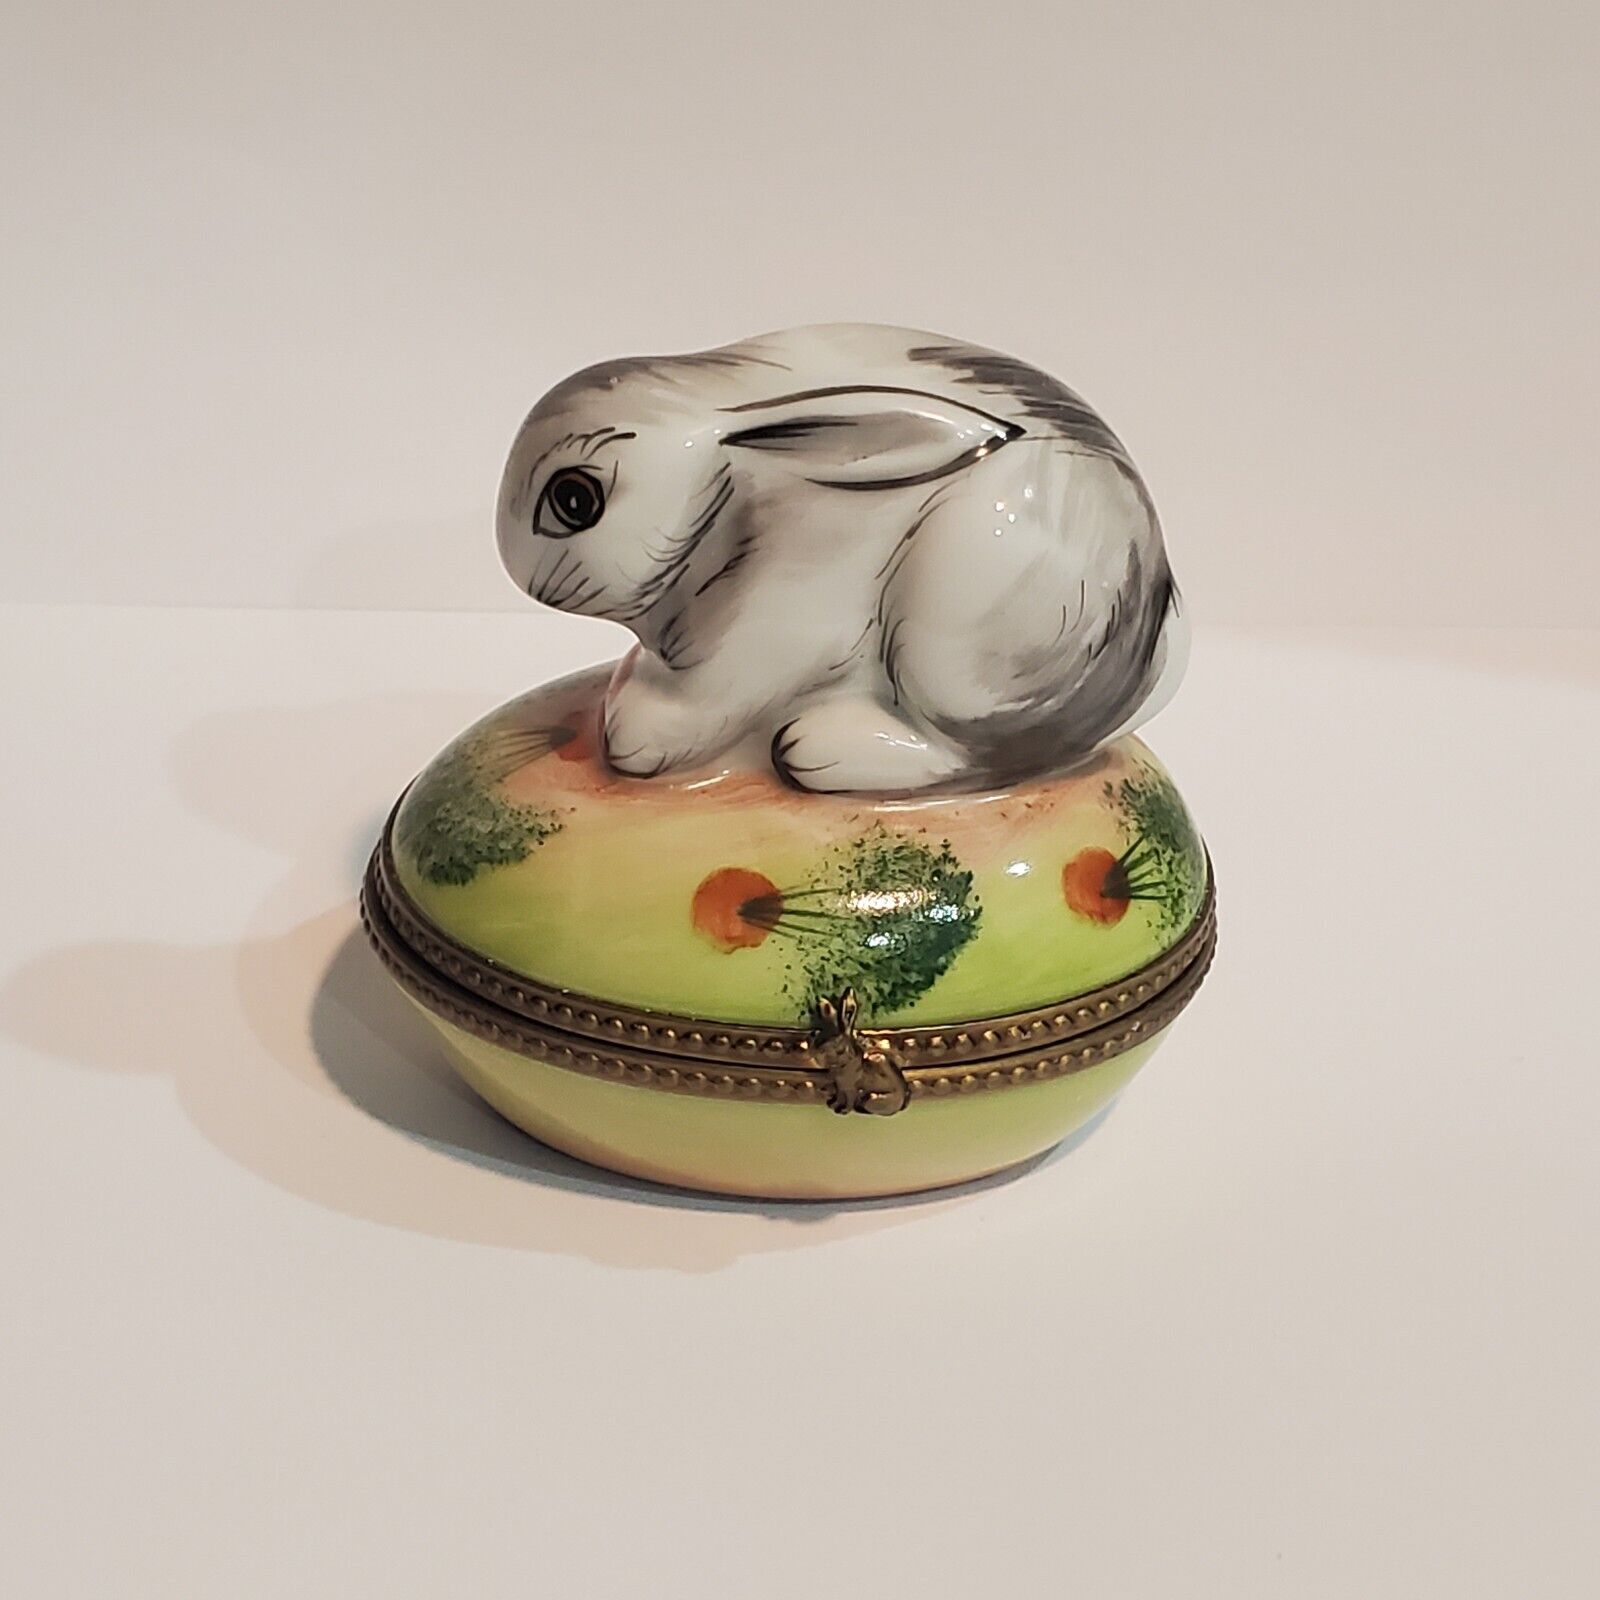 Limoges France Porcelain Trinket Box Peint Main Rabbit Bunny Easter